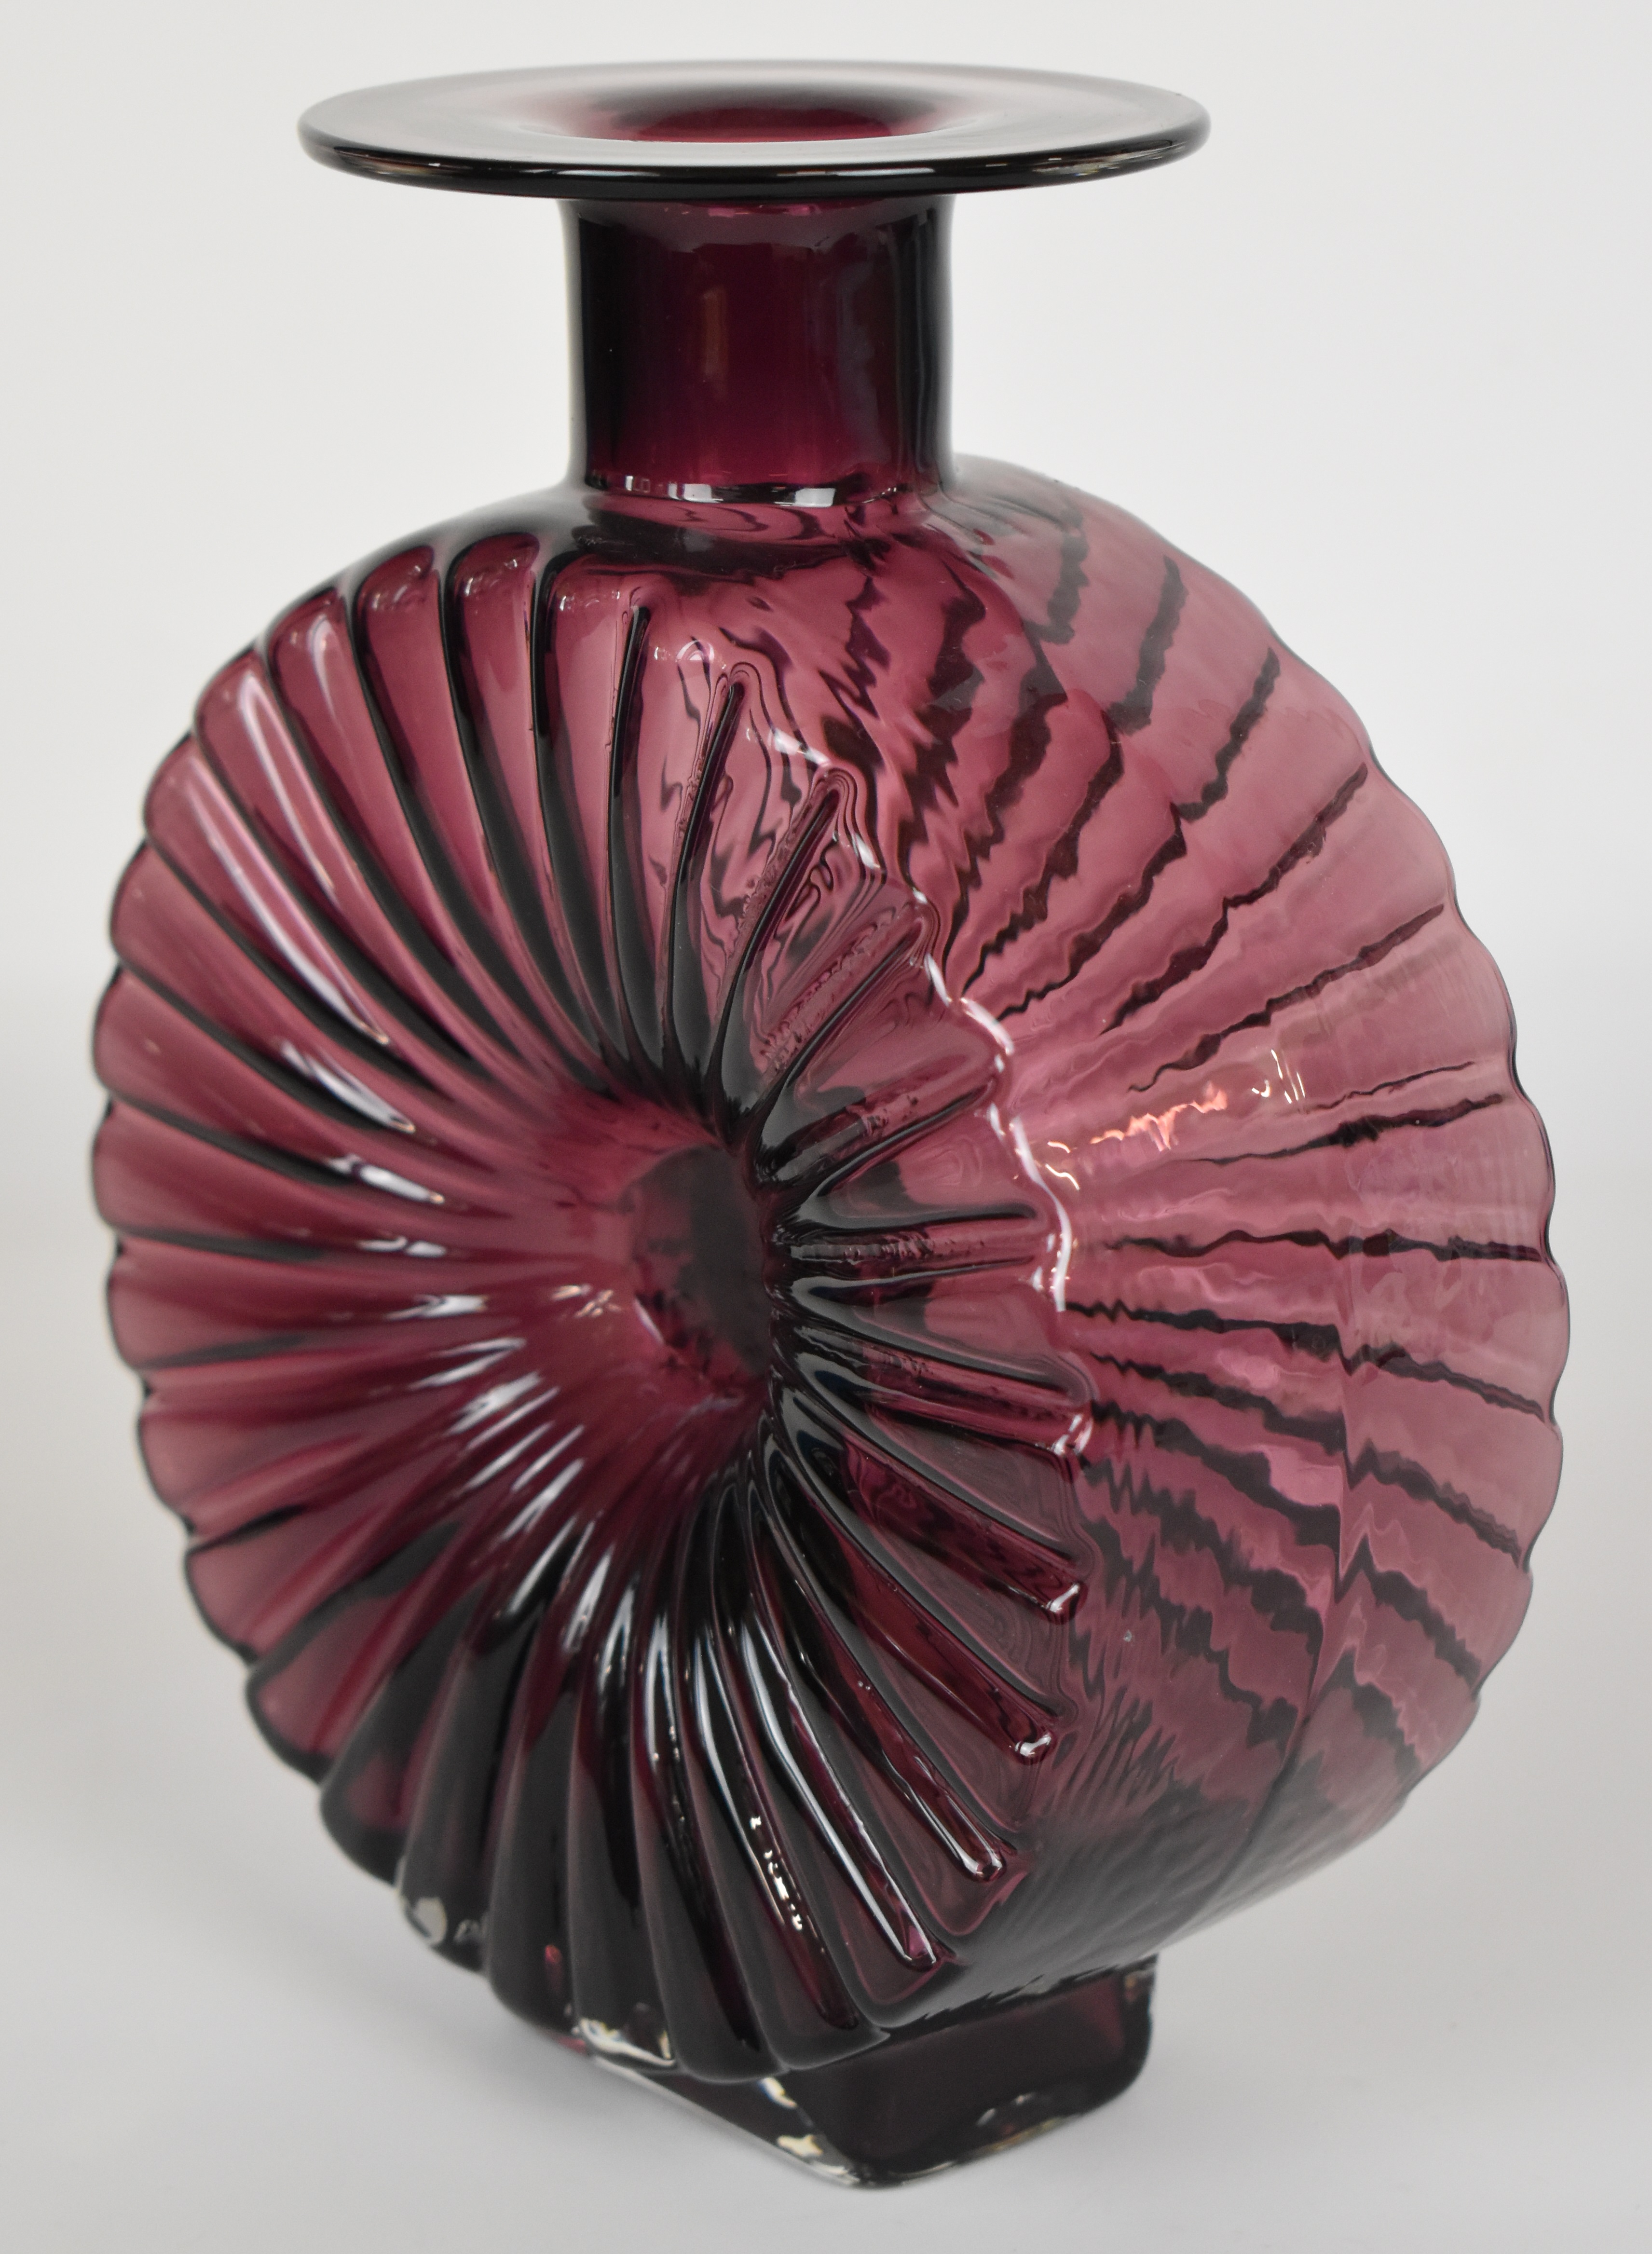 Helena Tynell for Riihimaen Lasi Riihimaki Aurinkopullo Sun Bottle glass vase in aubergine, 22.5cm - Image 4 of 4